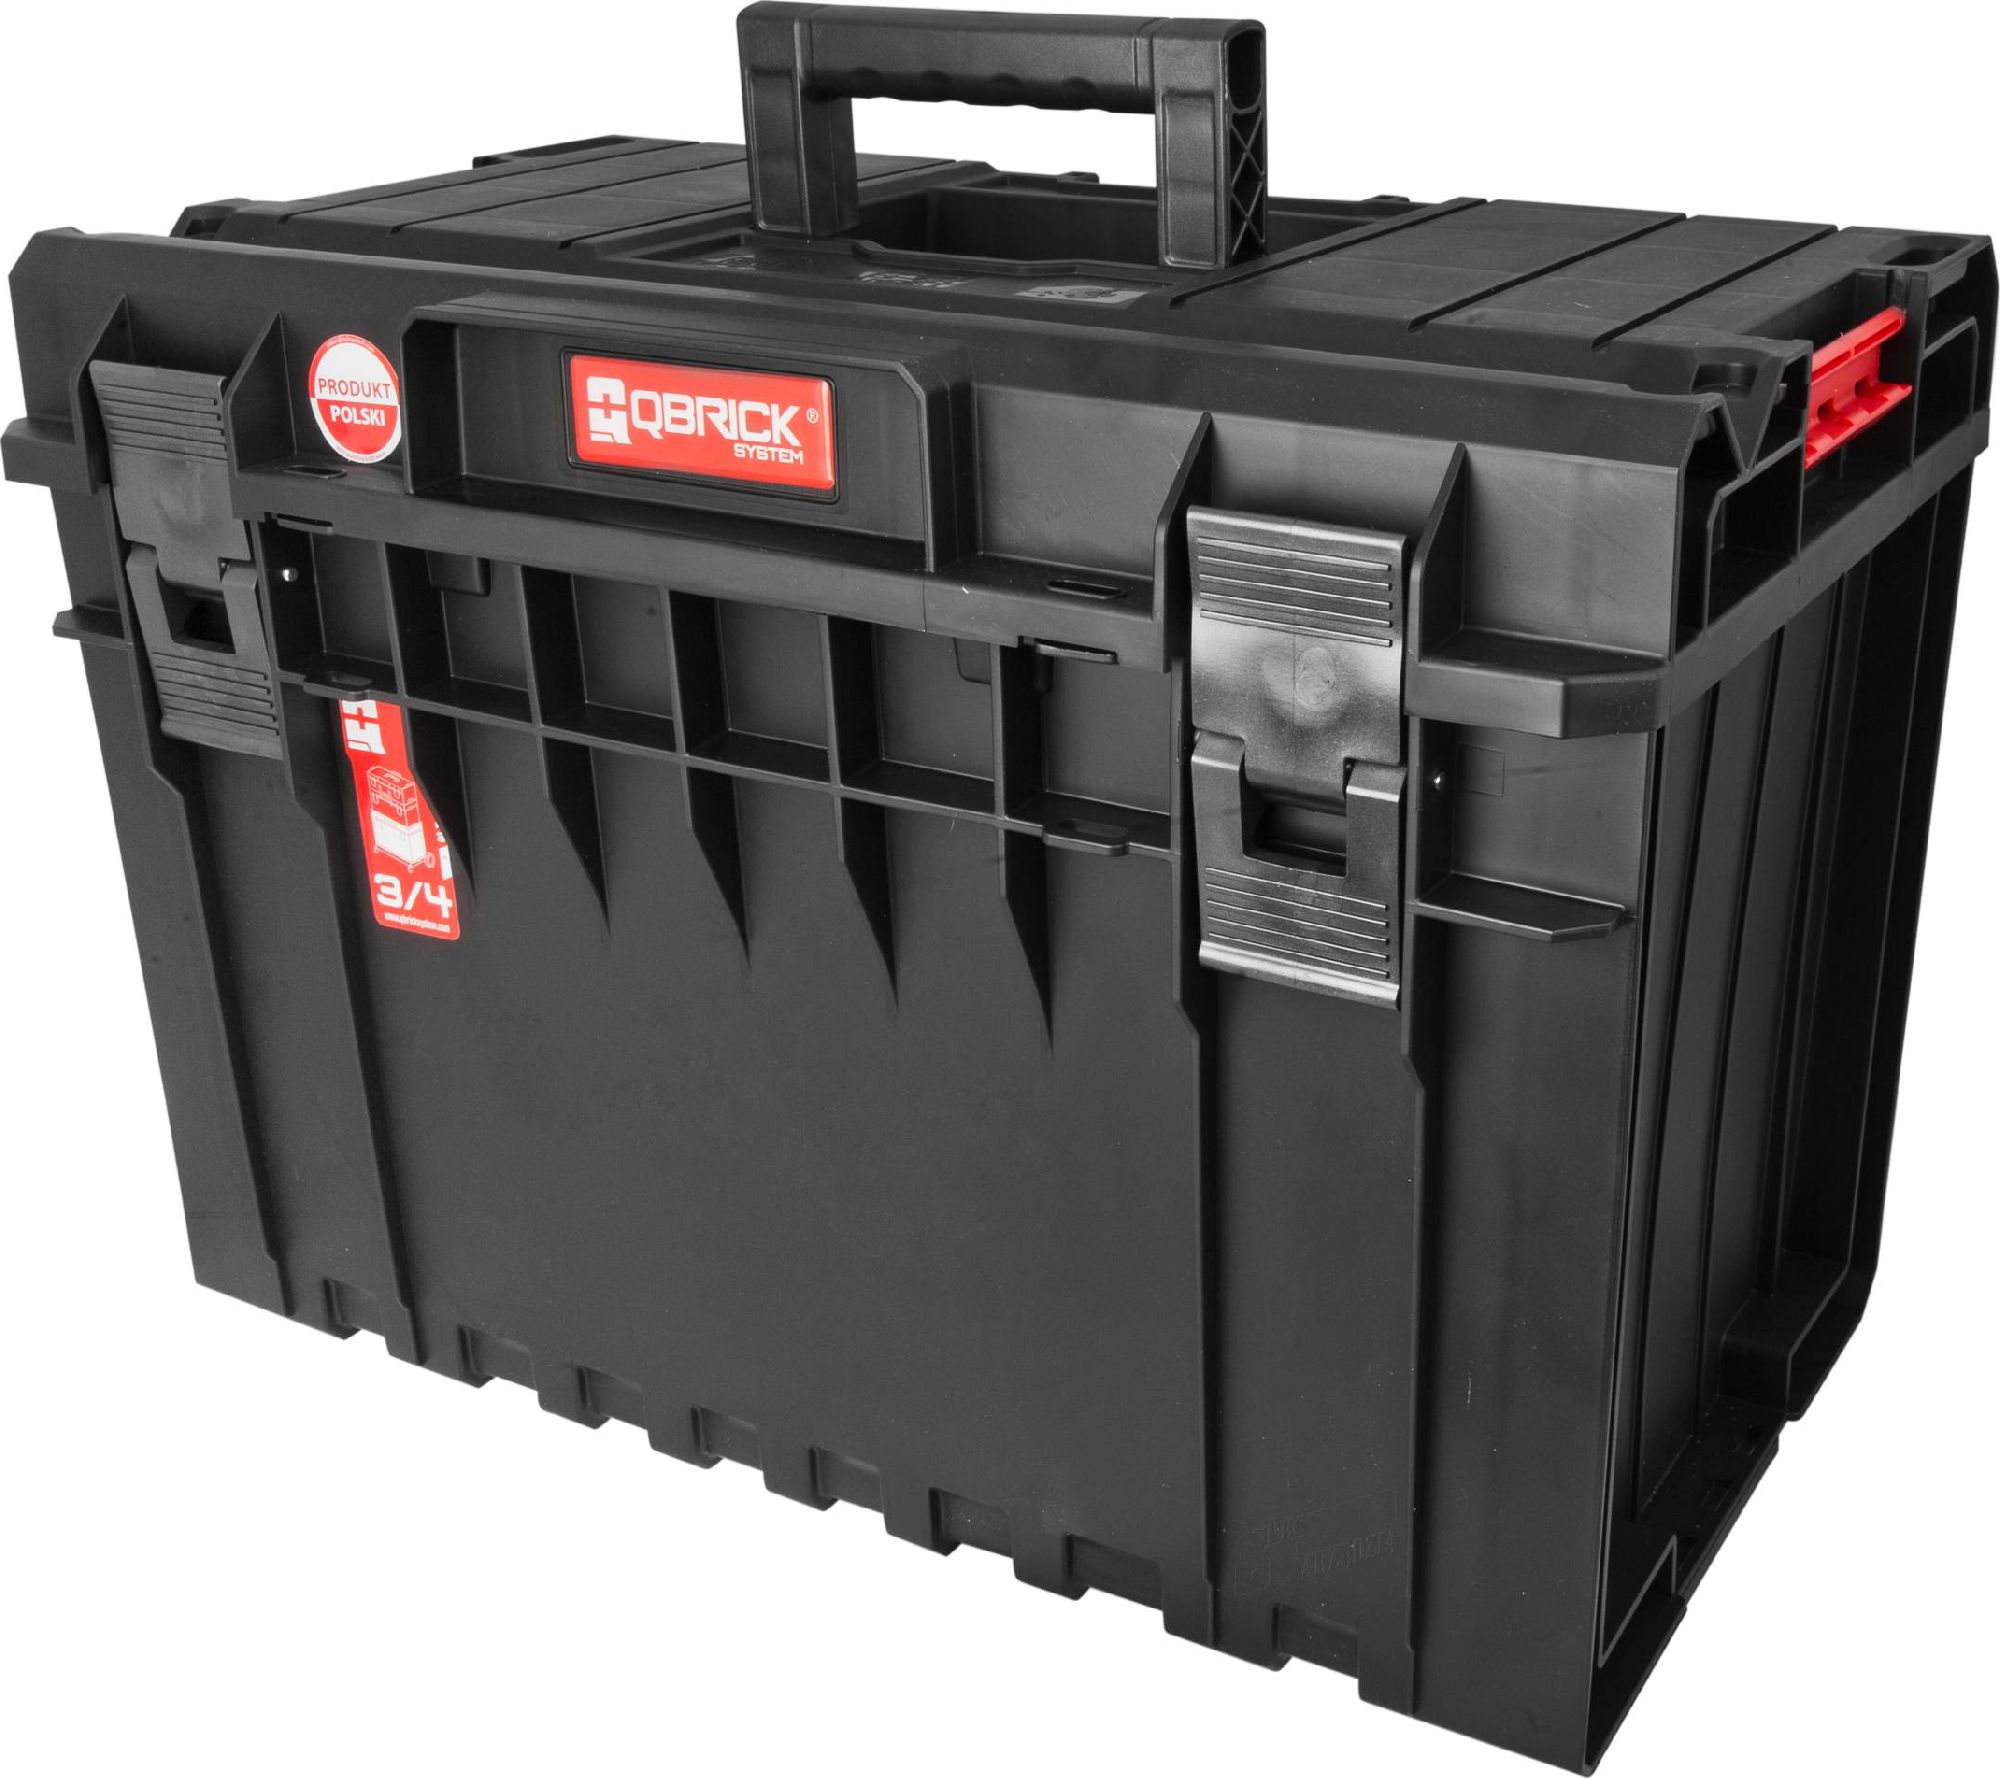 Qbrick System One 450 Basic toolbox